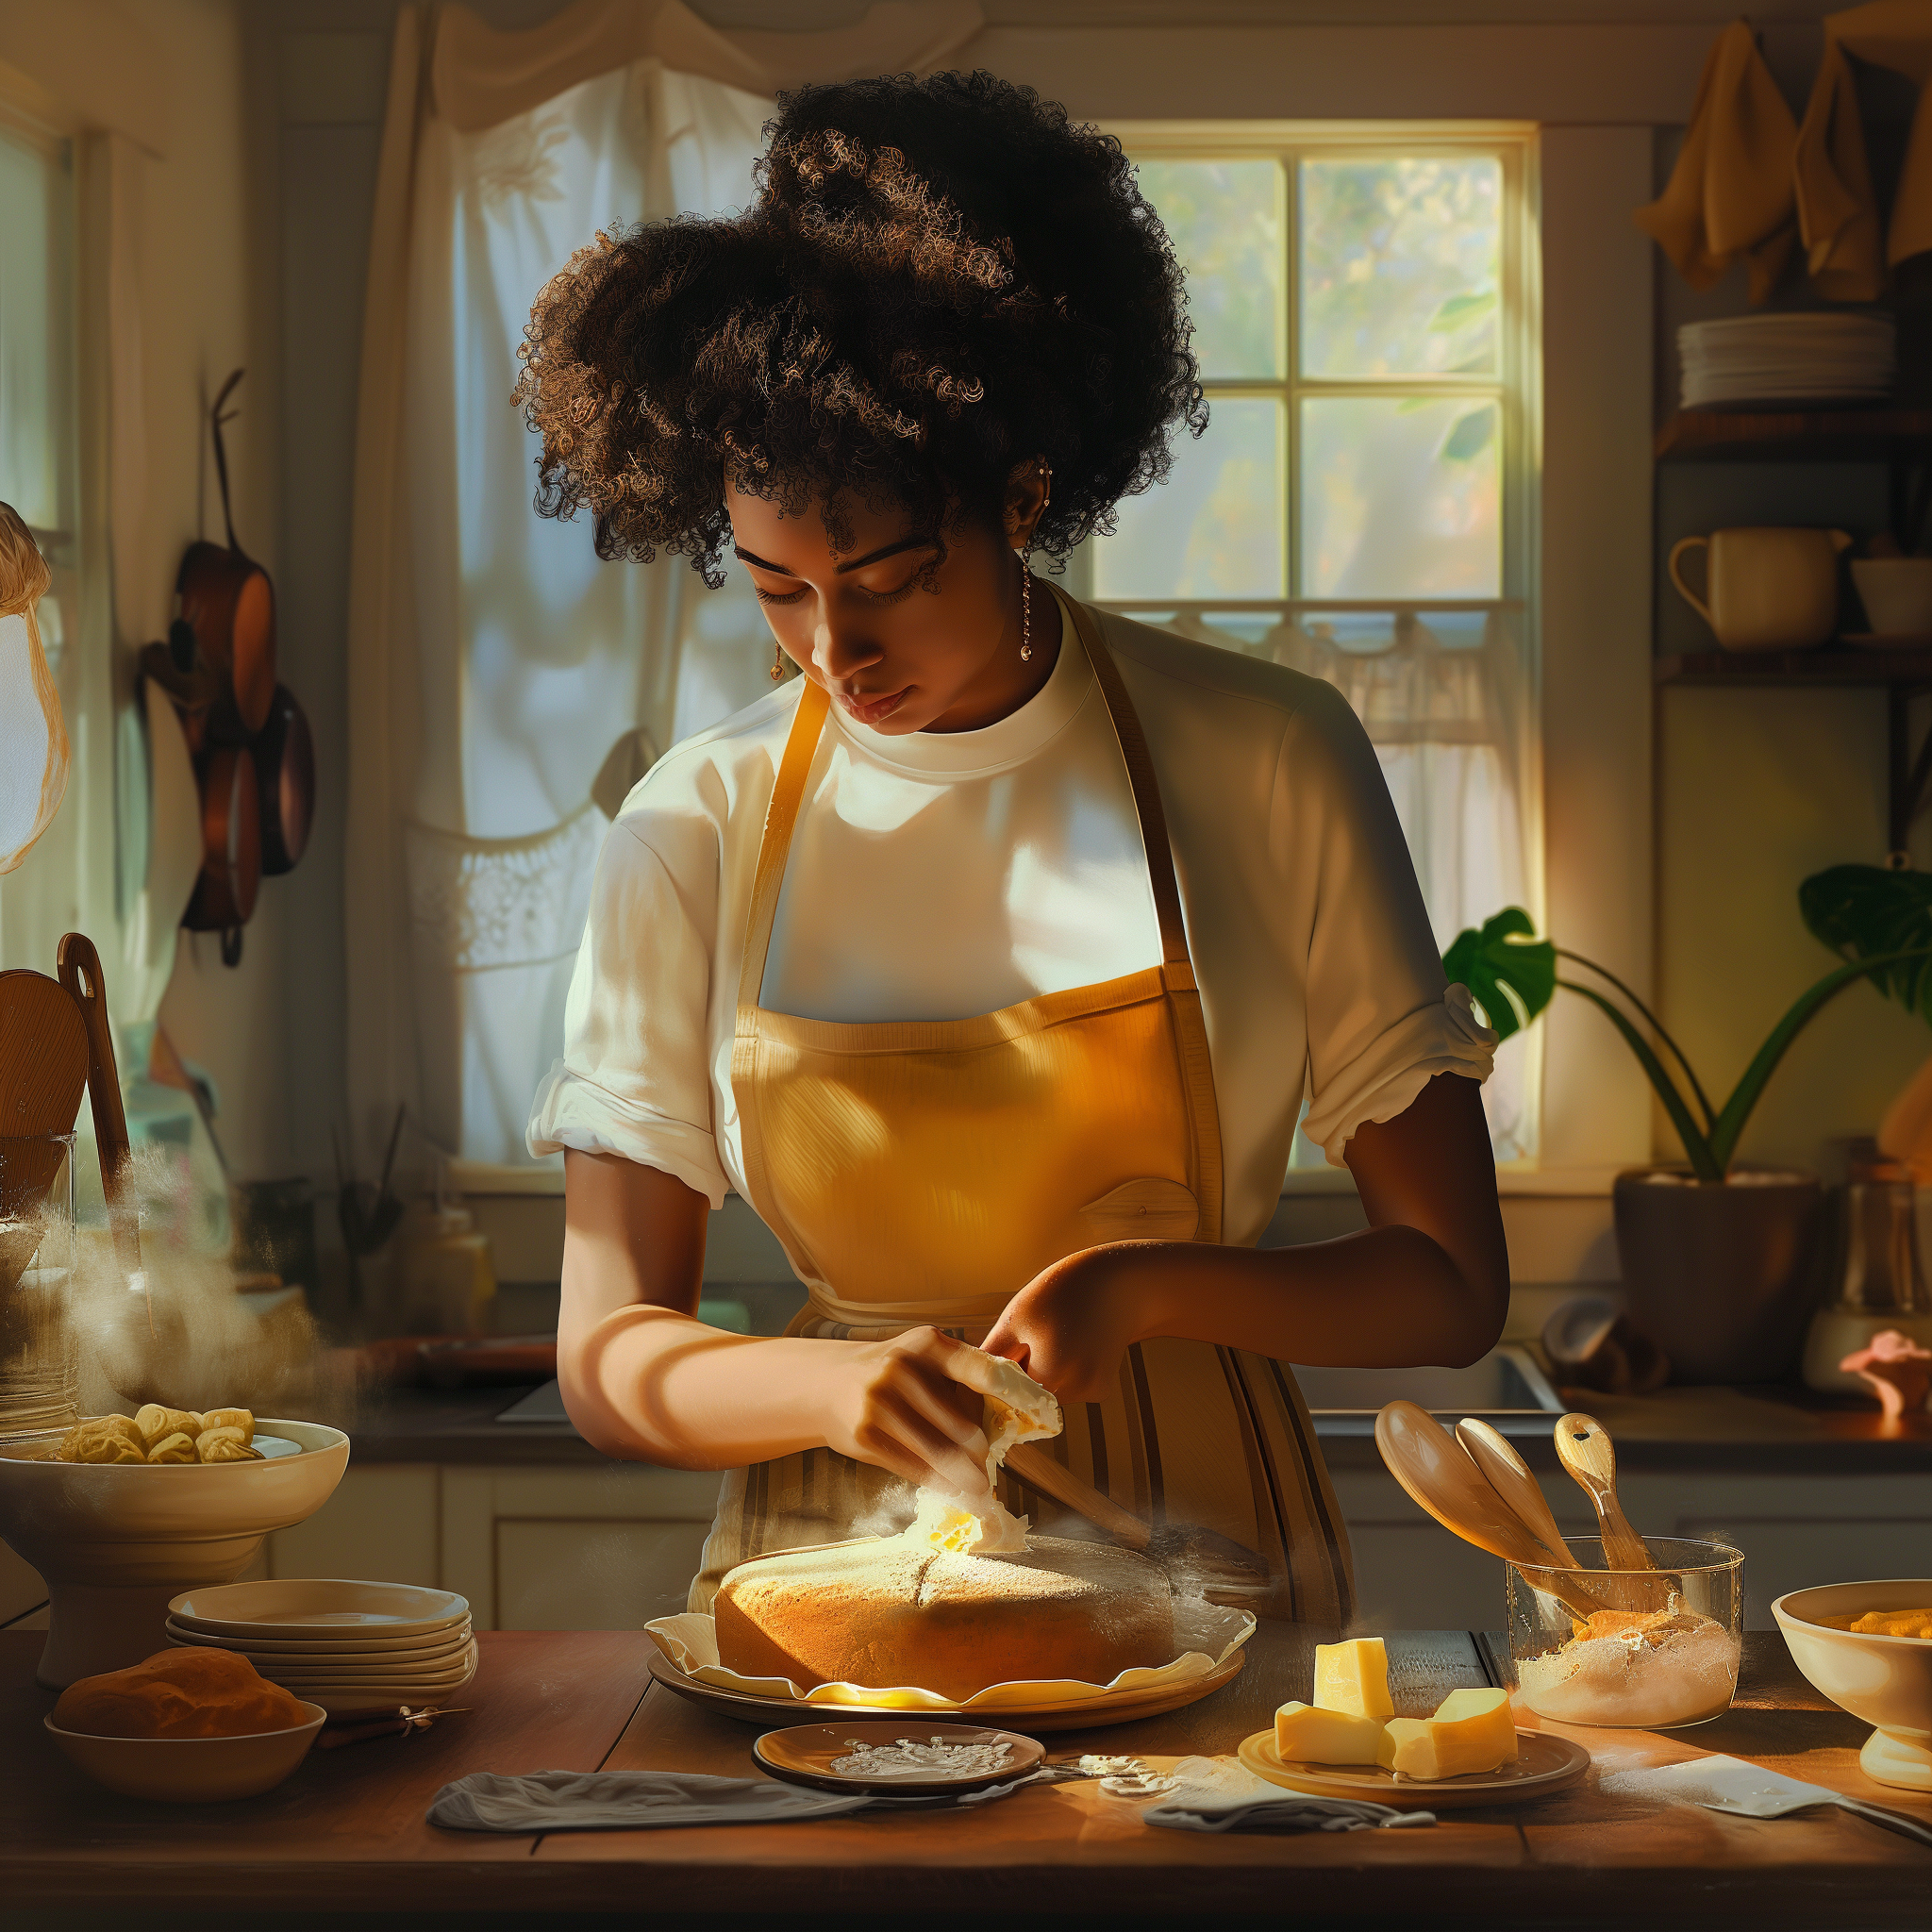 A woman baking a cake | Source: Midjourney